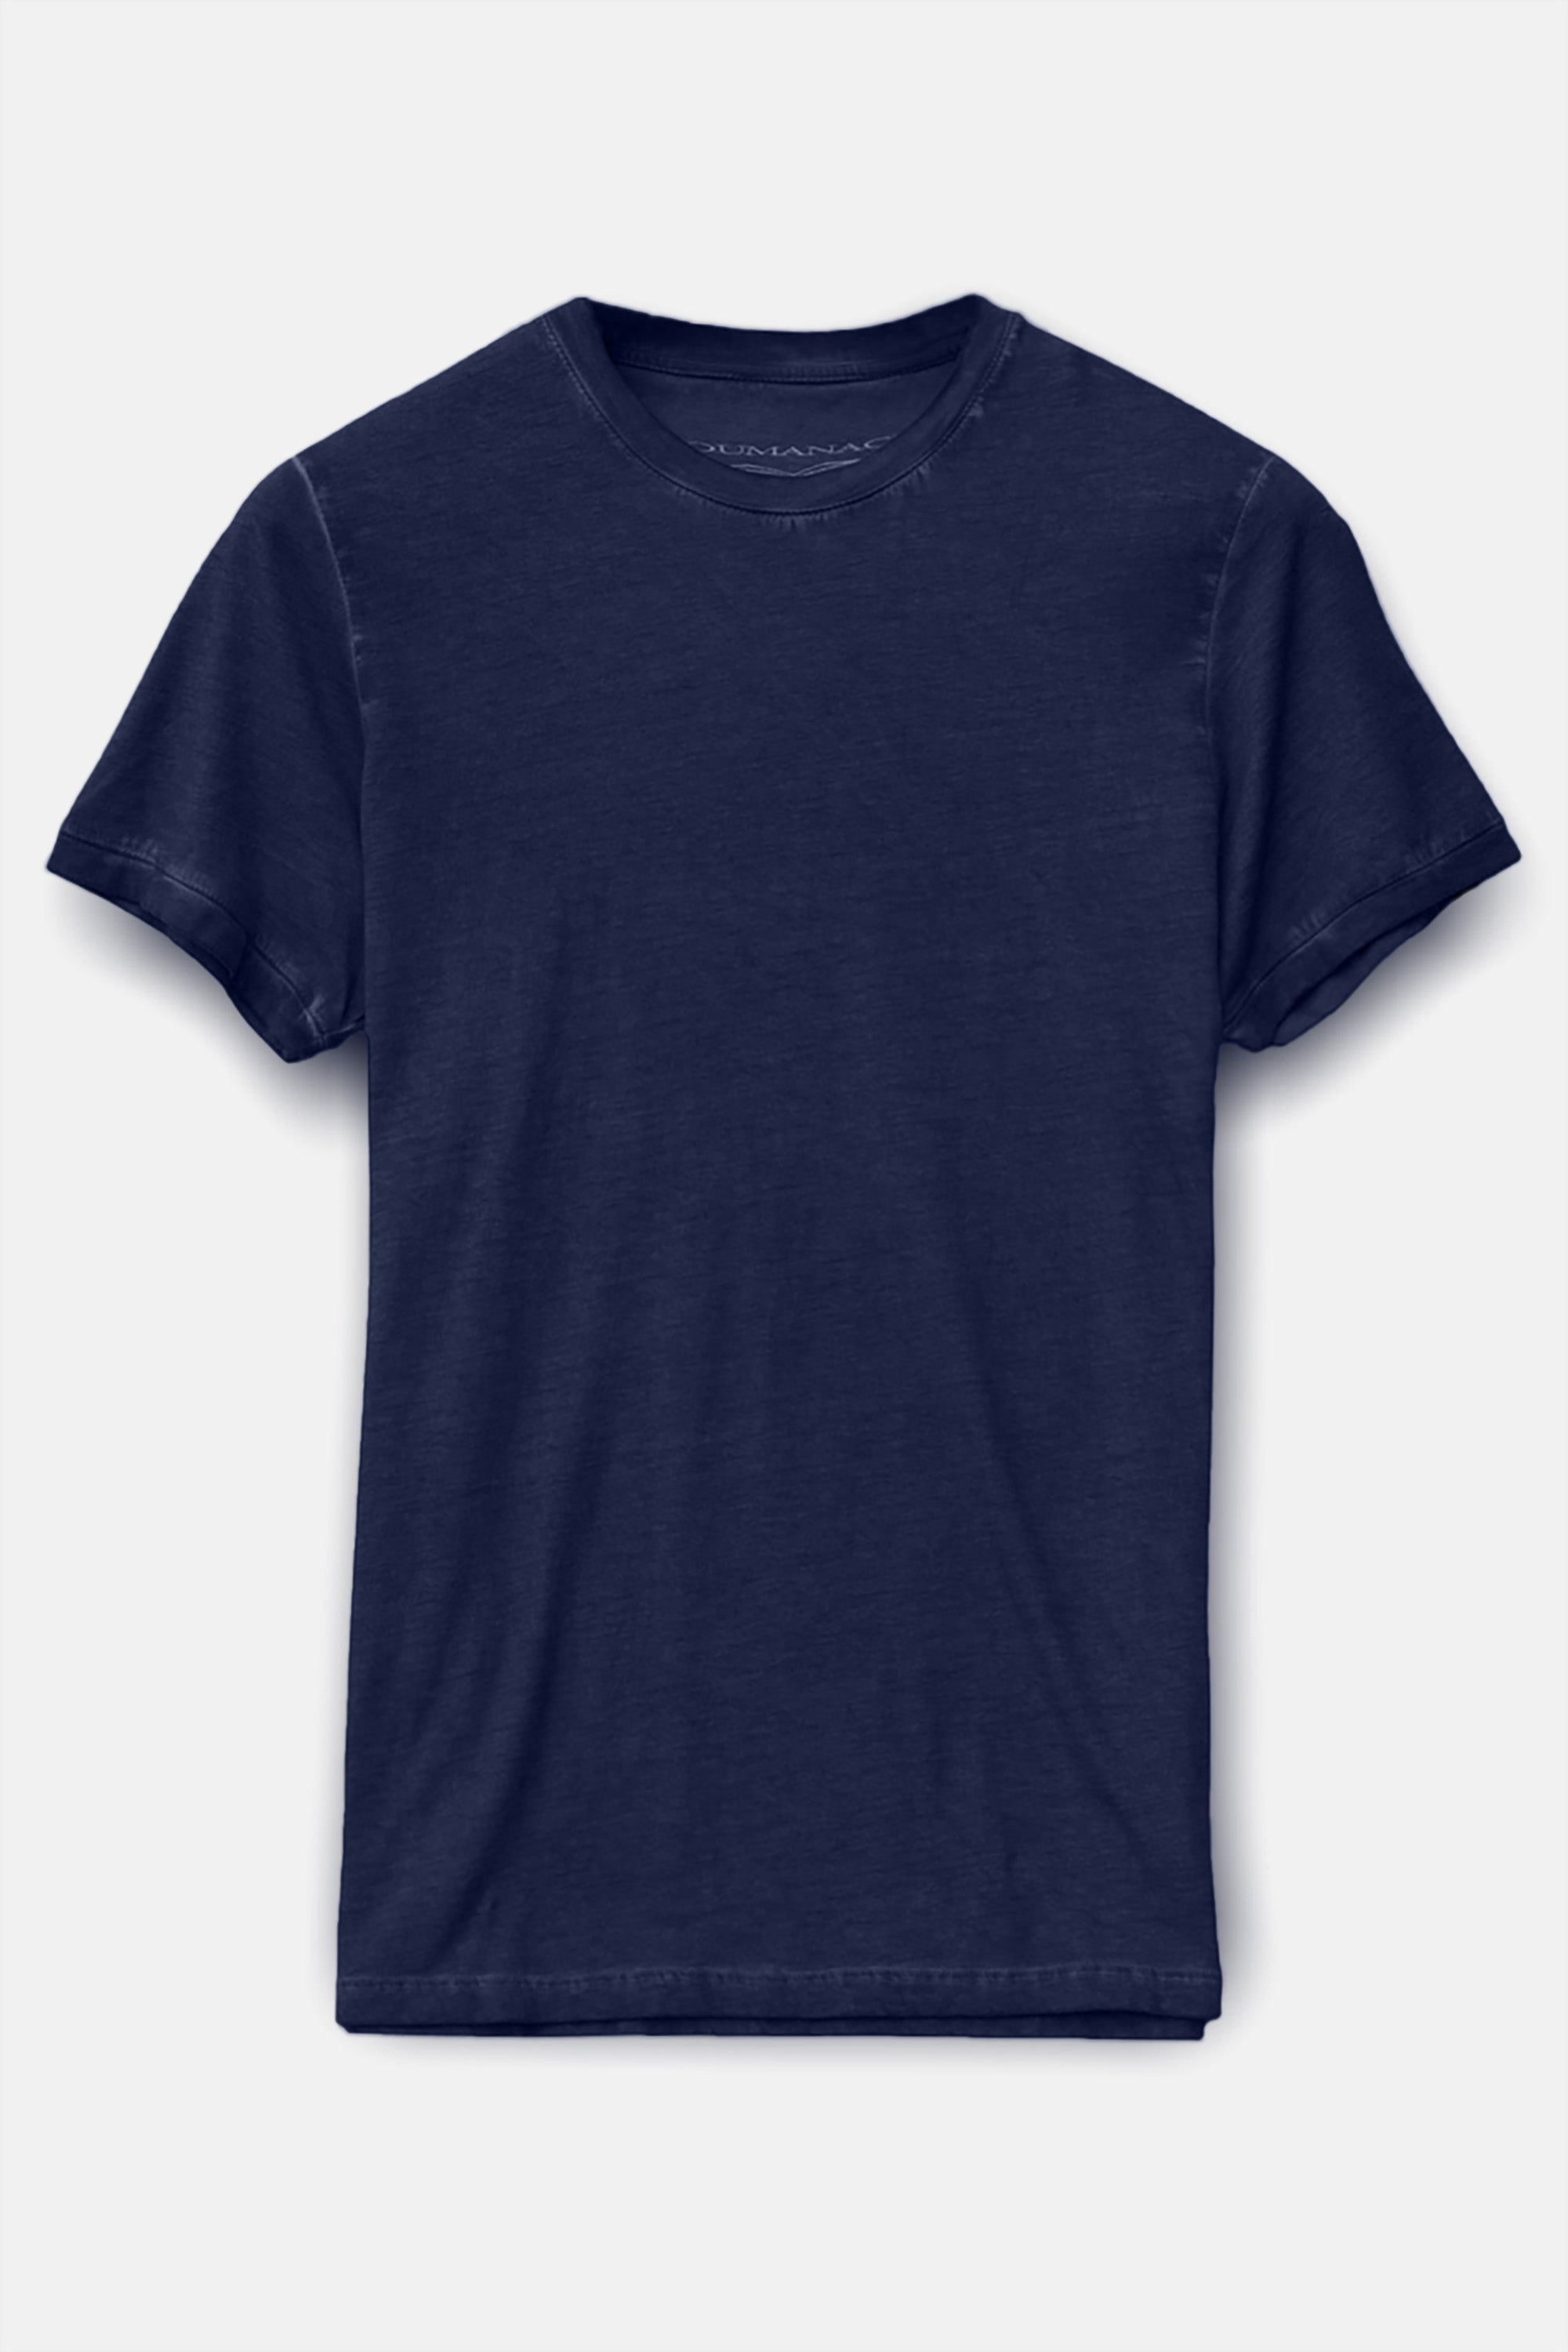 Smart Casual Cotton T-Shirt - Navy